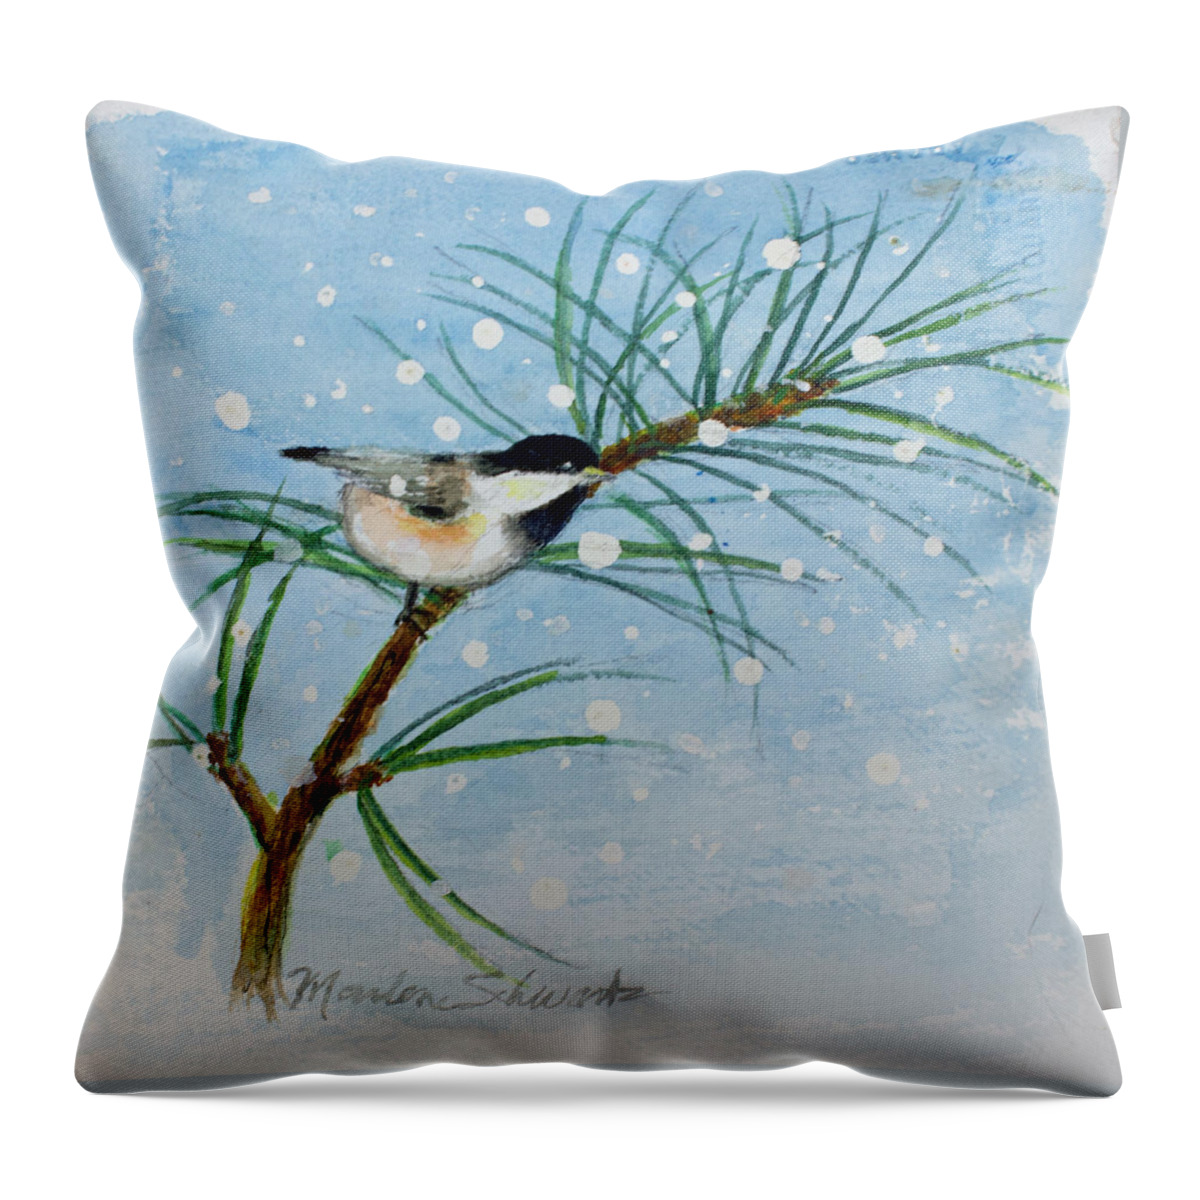 Chickadee Throw Pillow featuring the painting Winter Chickadee by Marlene Schwartz Massey